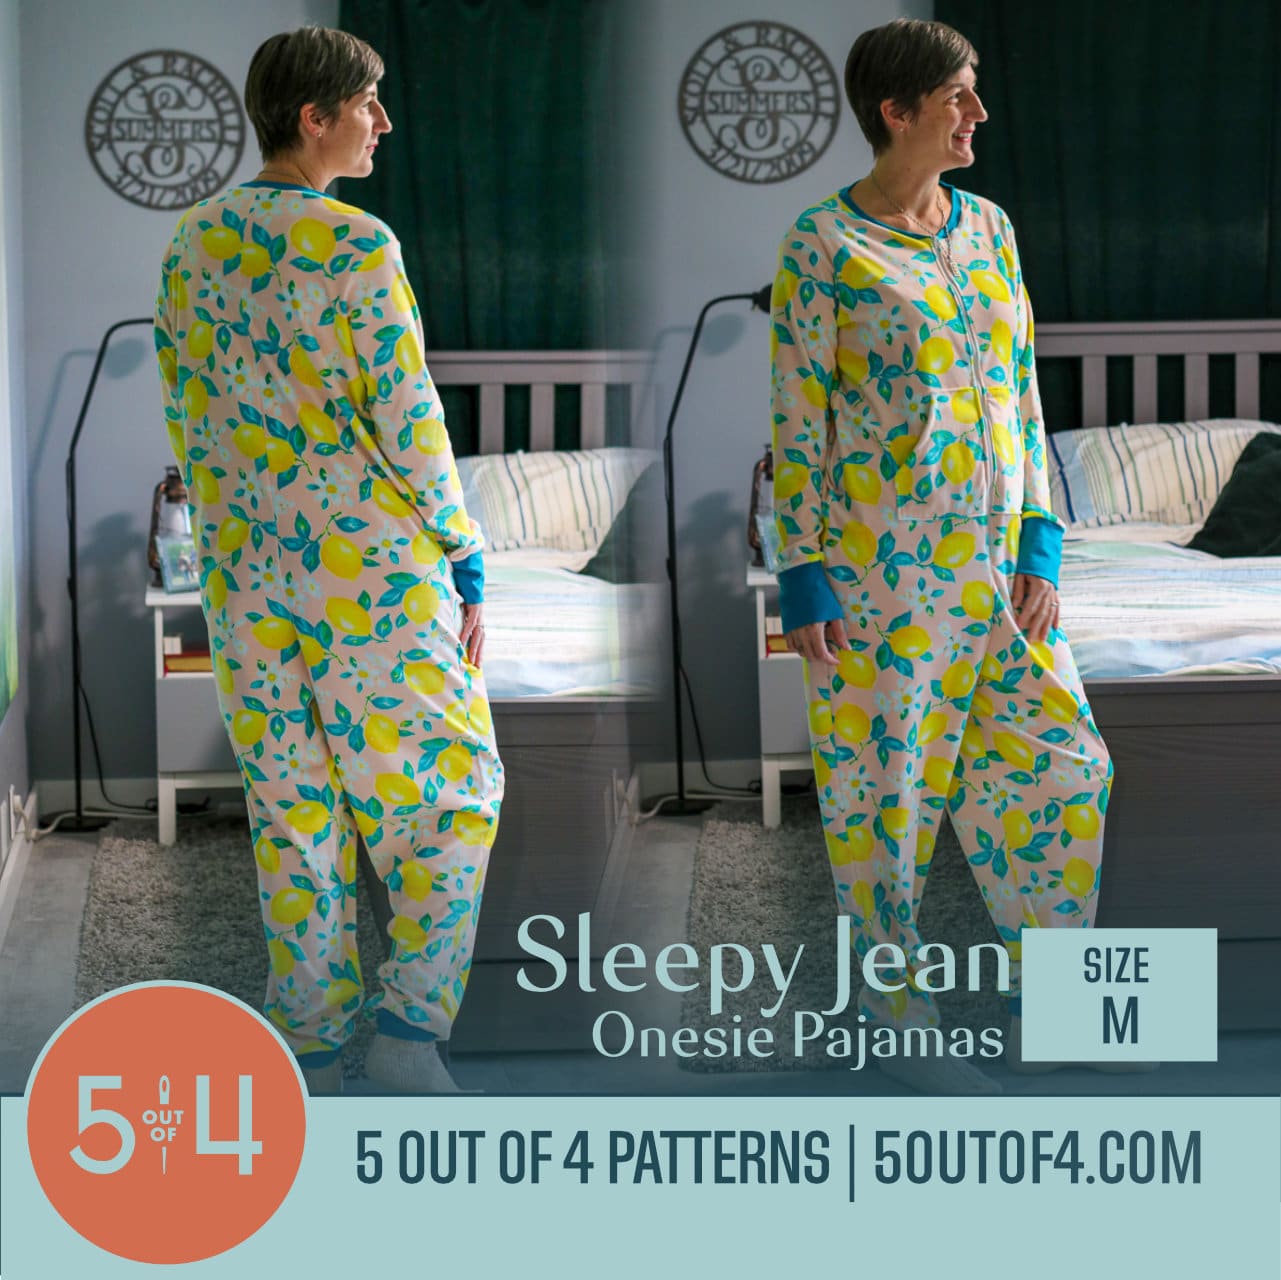 Sleepy Jean Onesie Pajamas Family Bundle - 5 out of 4 Patterns